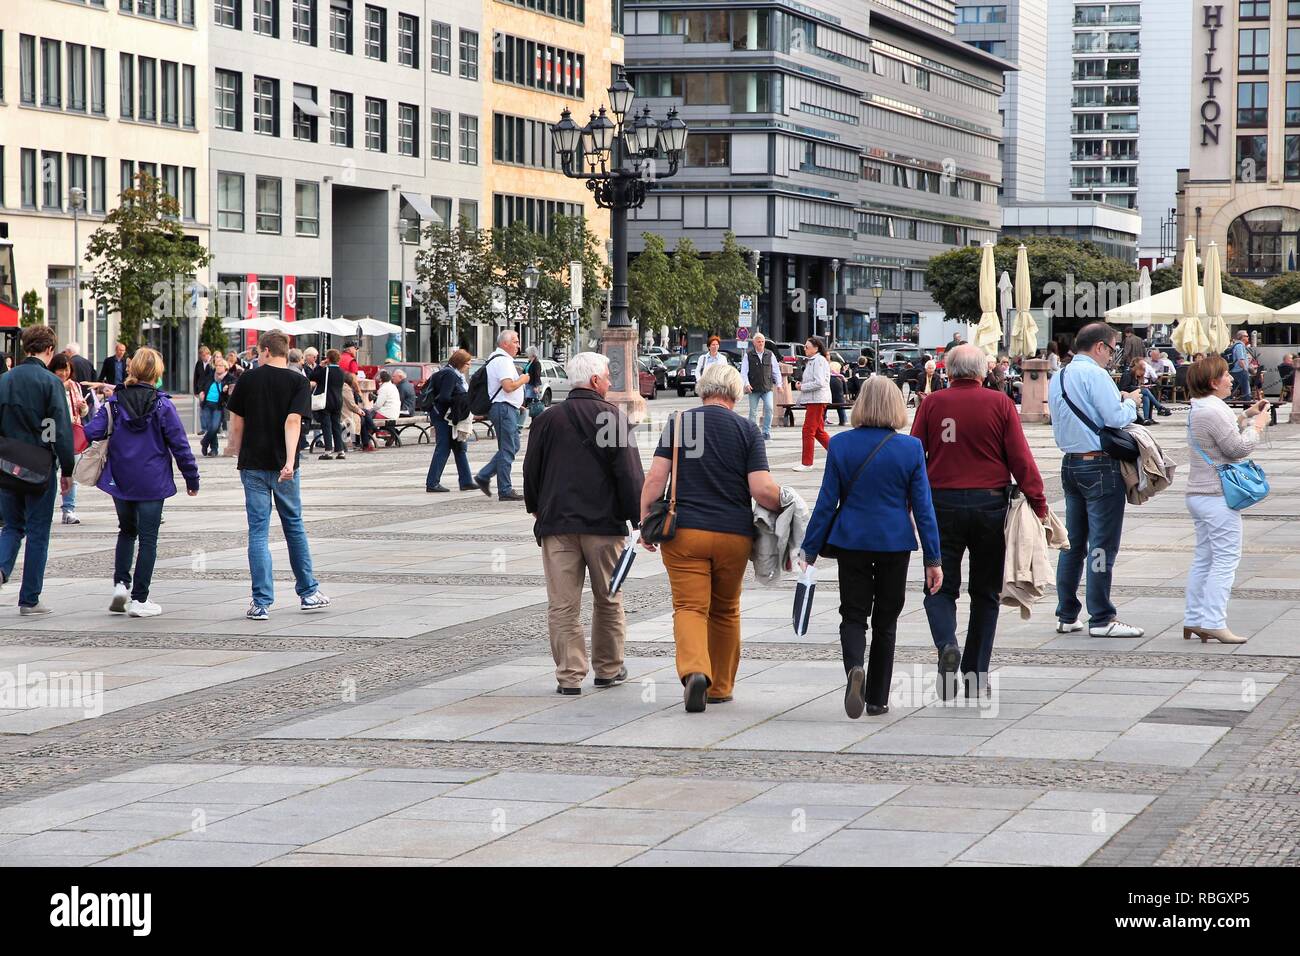 BERLIN, GERMANY - AUGUST 26, 2014: People visit Gendarmenmarkt square in Berlin. Berlin is Germany's largest city with population of 3.5 million. Stock Photo